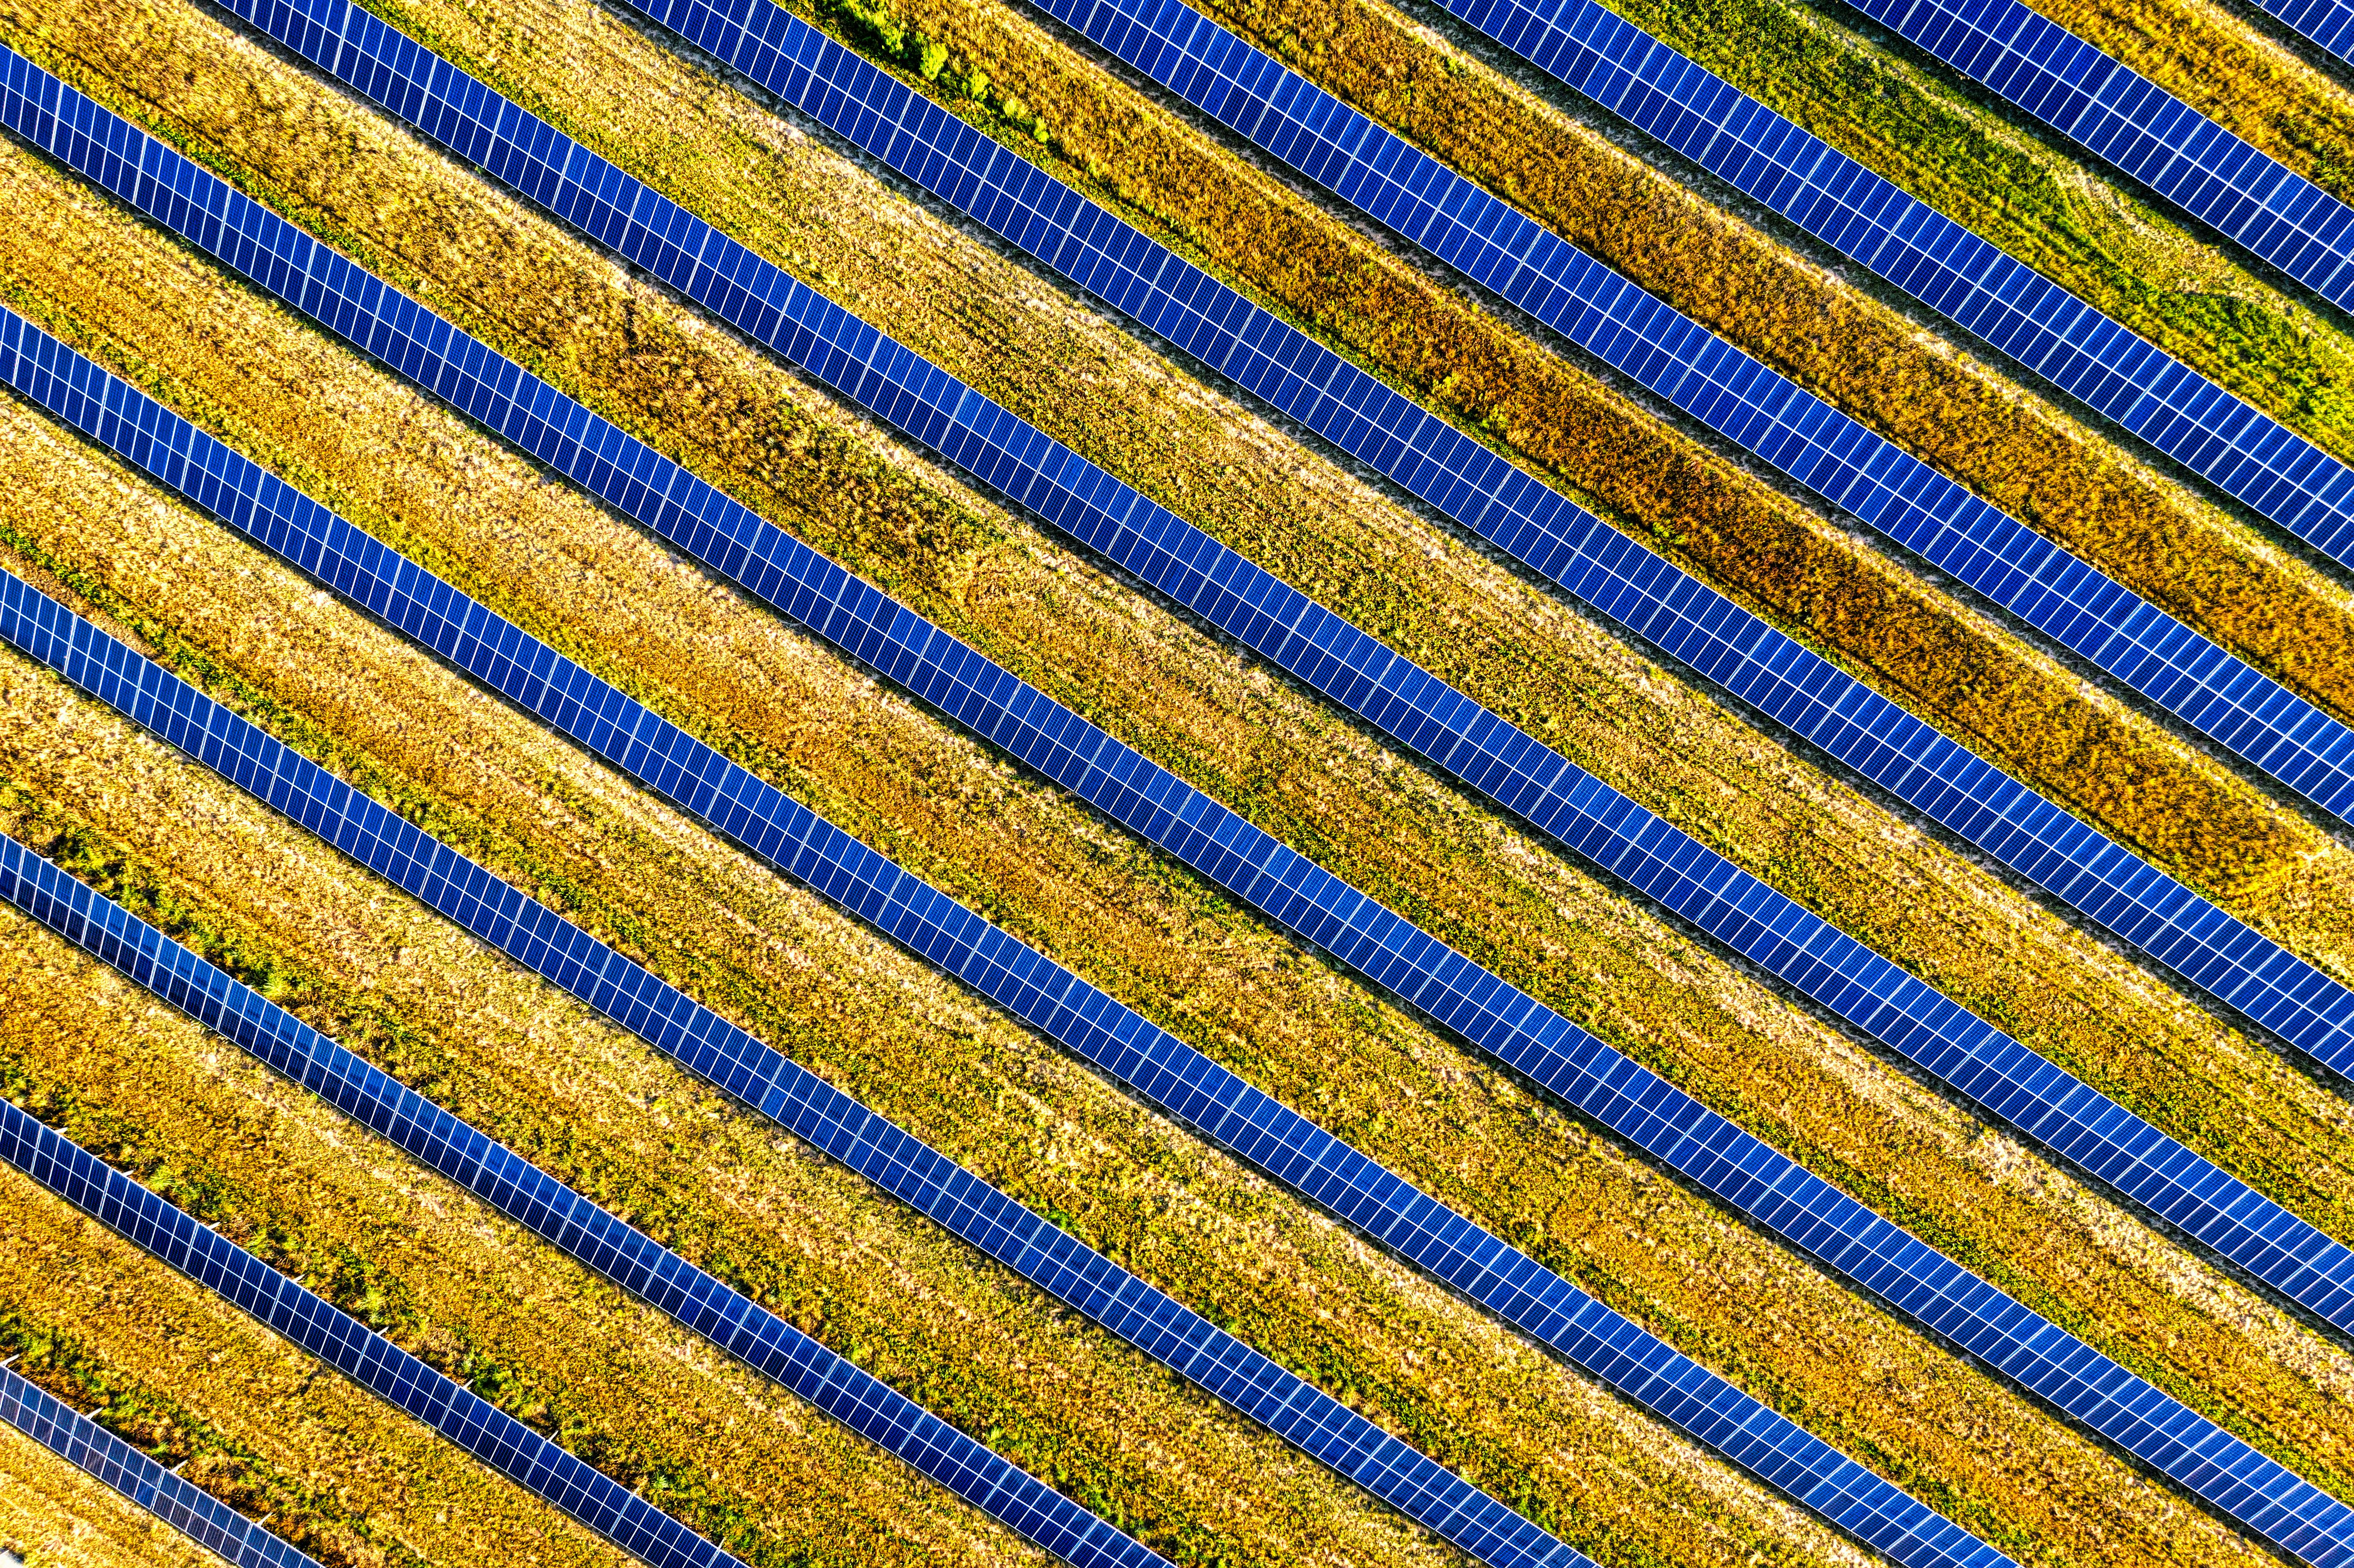 Community Solar Farms: The Next Big Thing?